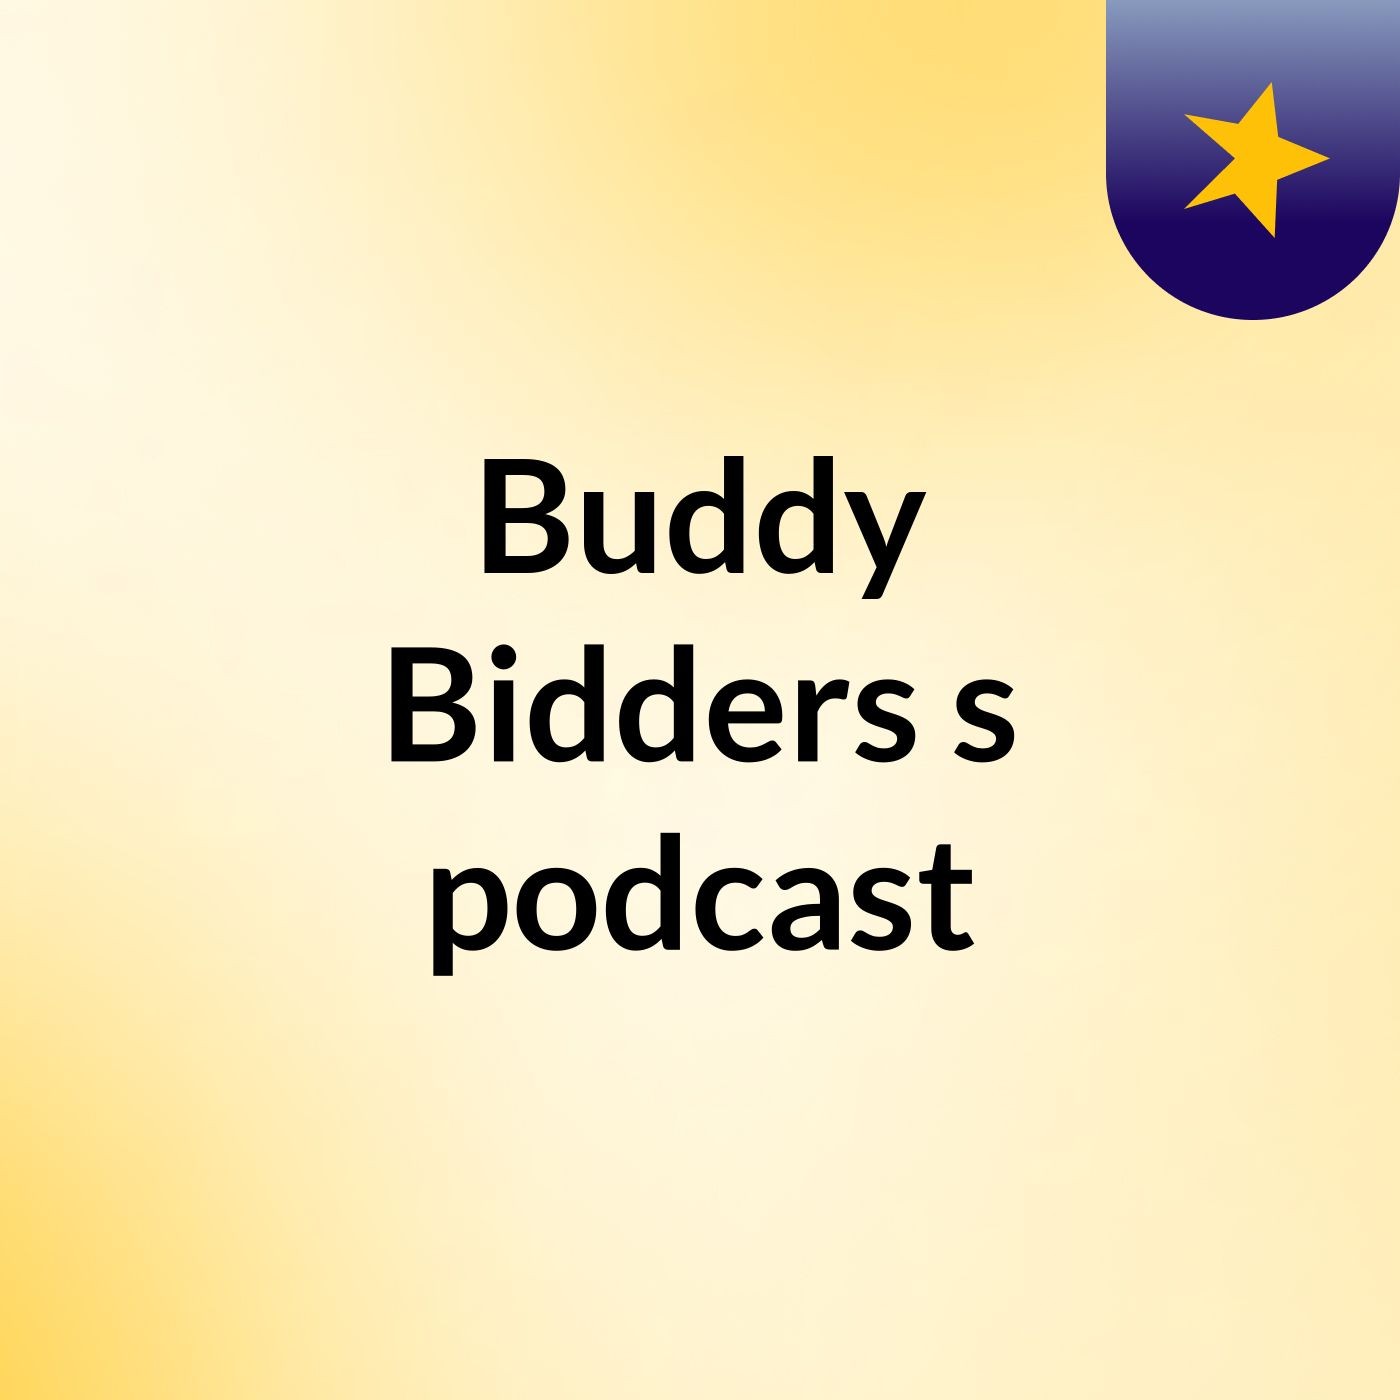 Buddy Bidders's podcast